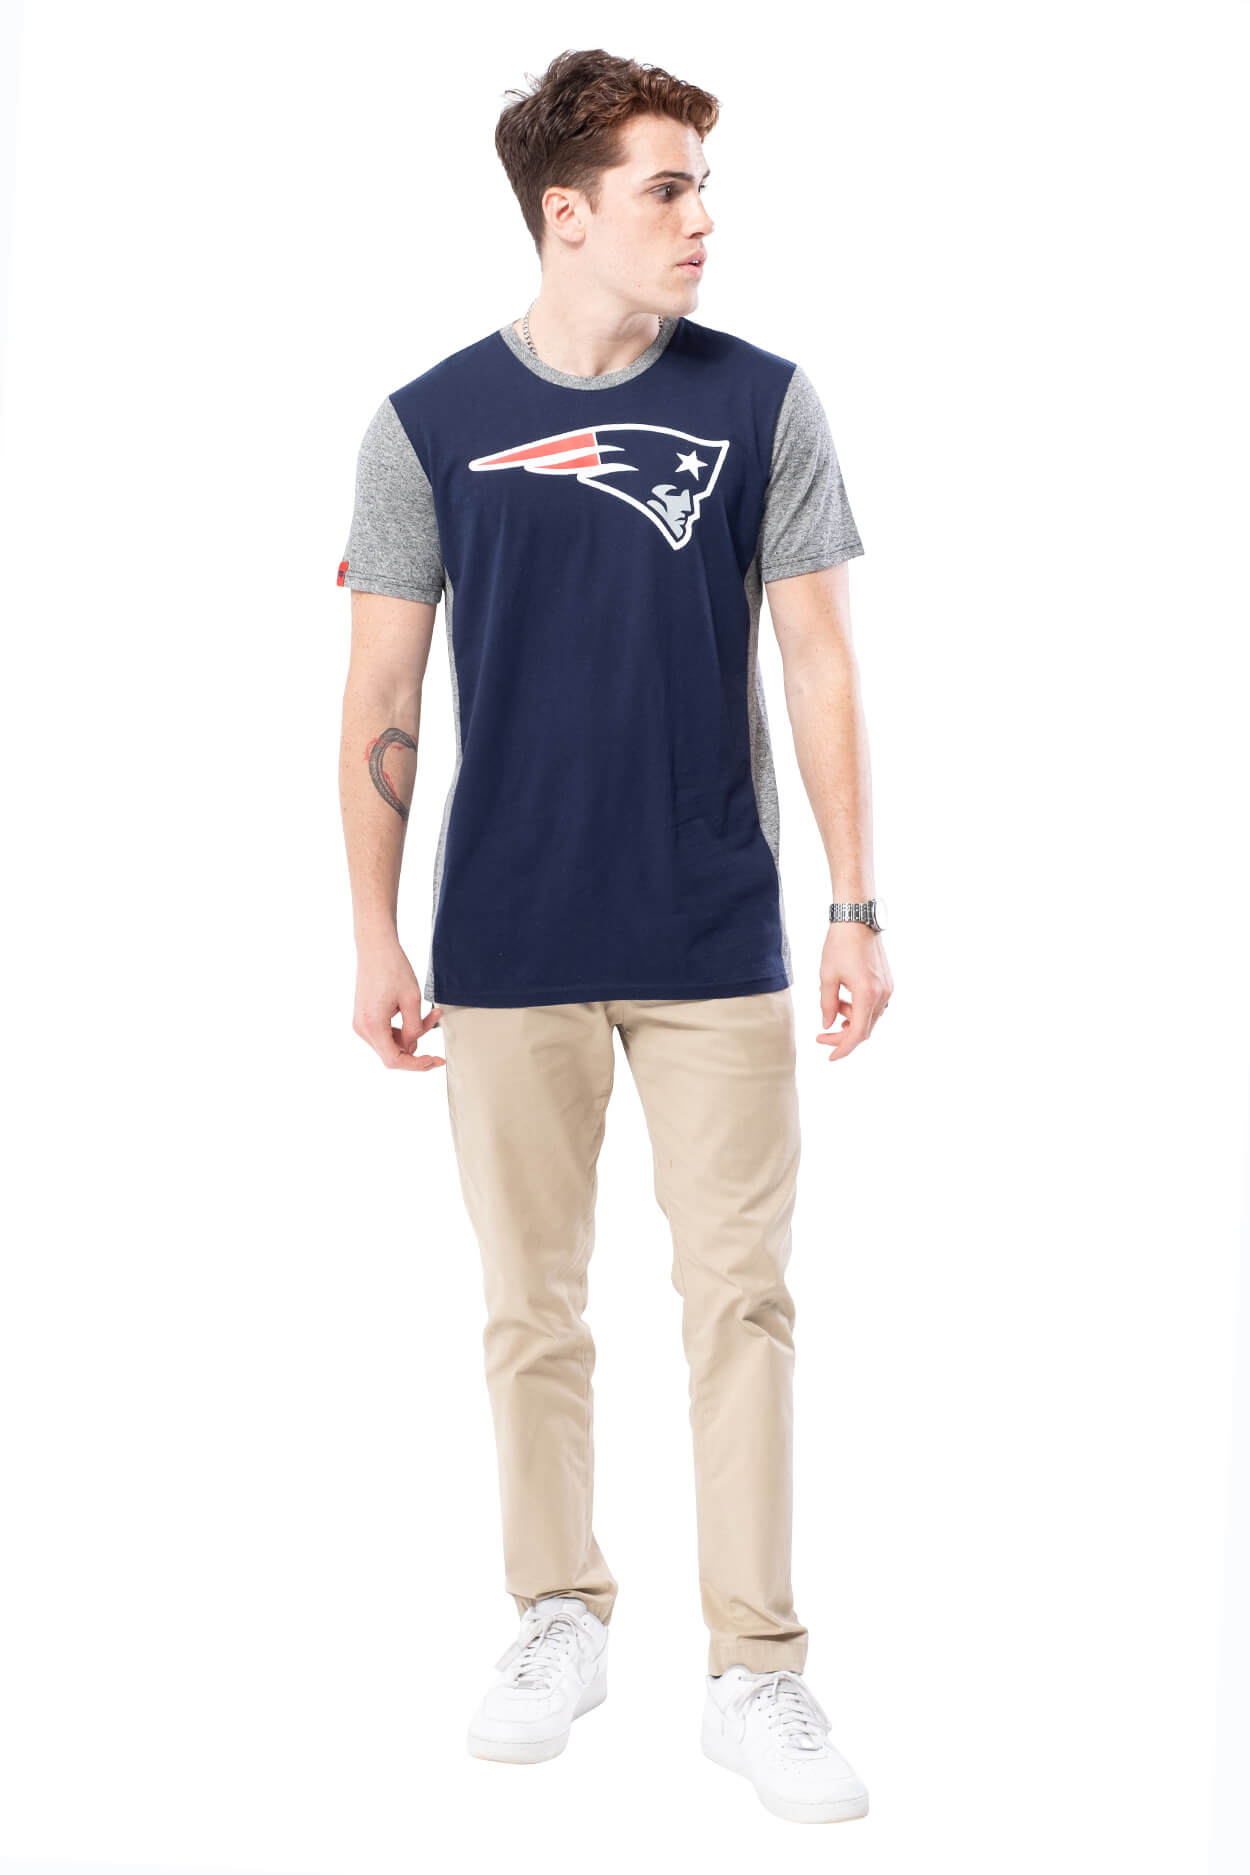 NFL New England Patriots Men's Raglan Short Sleeve Tee|New England Patriots